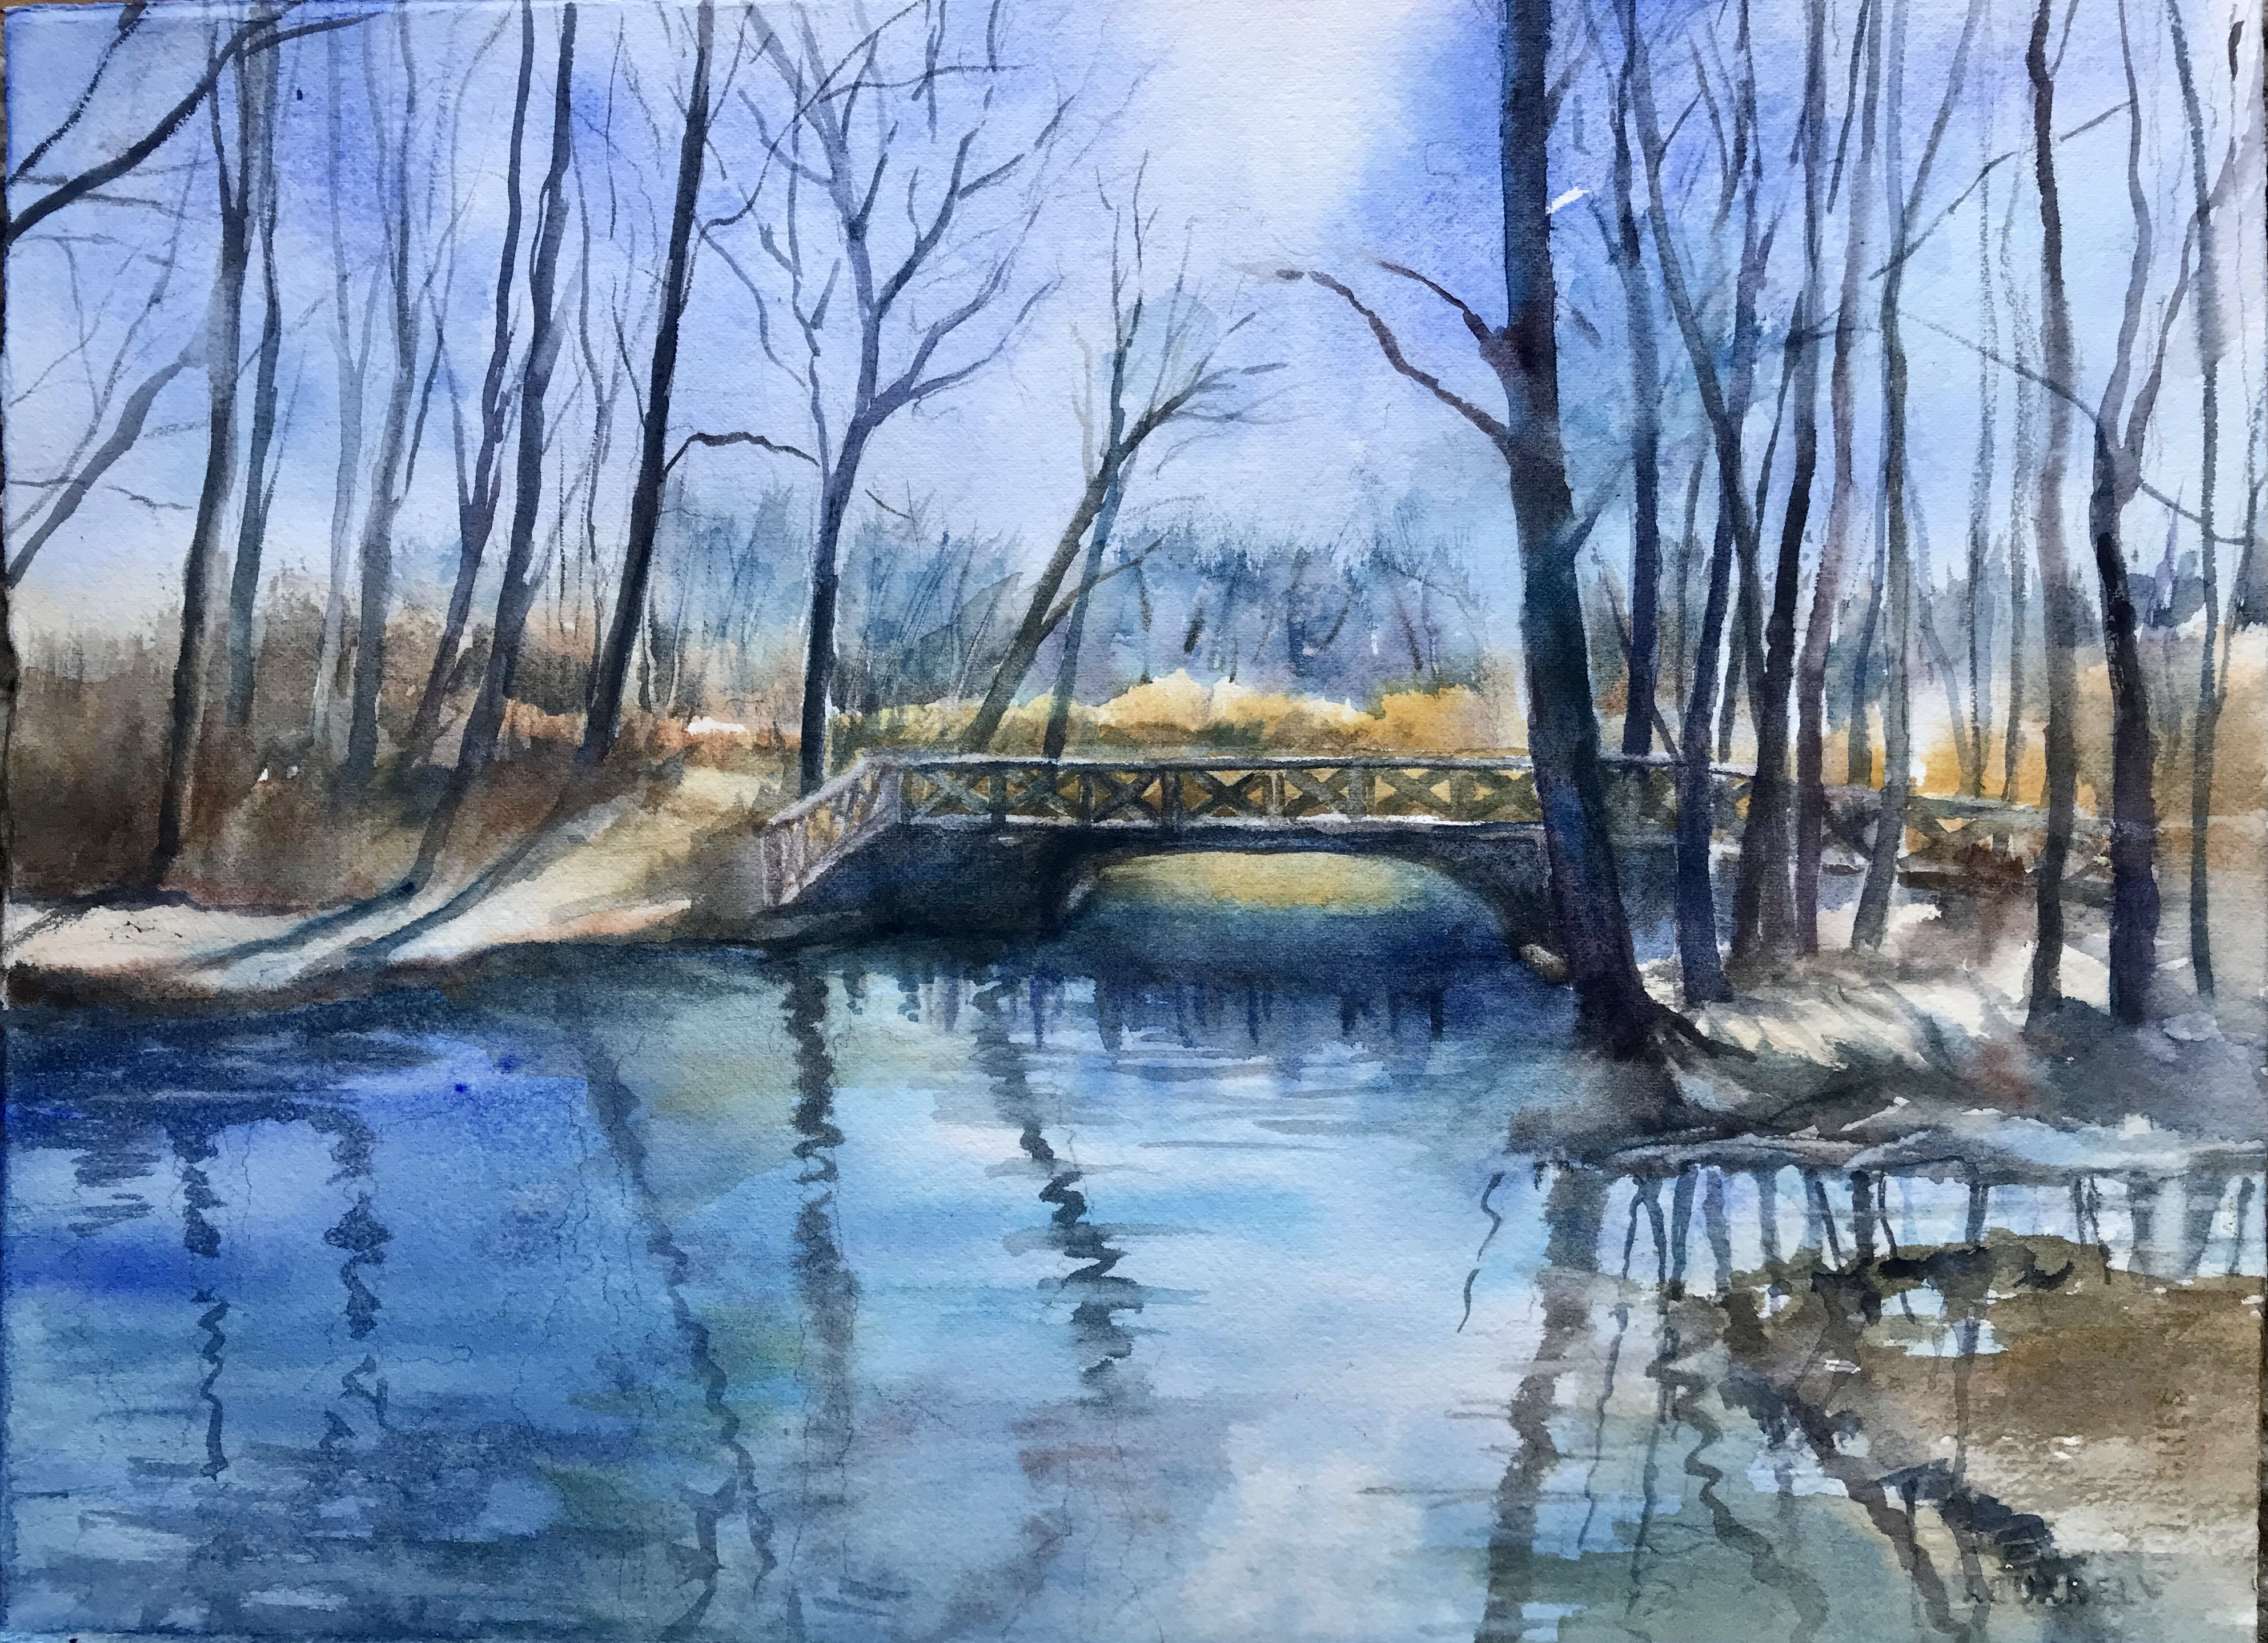 "Bayard Bridge" by Susan Sterber